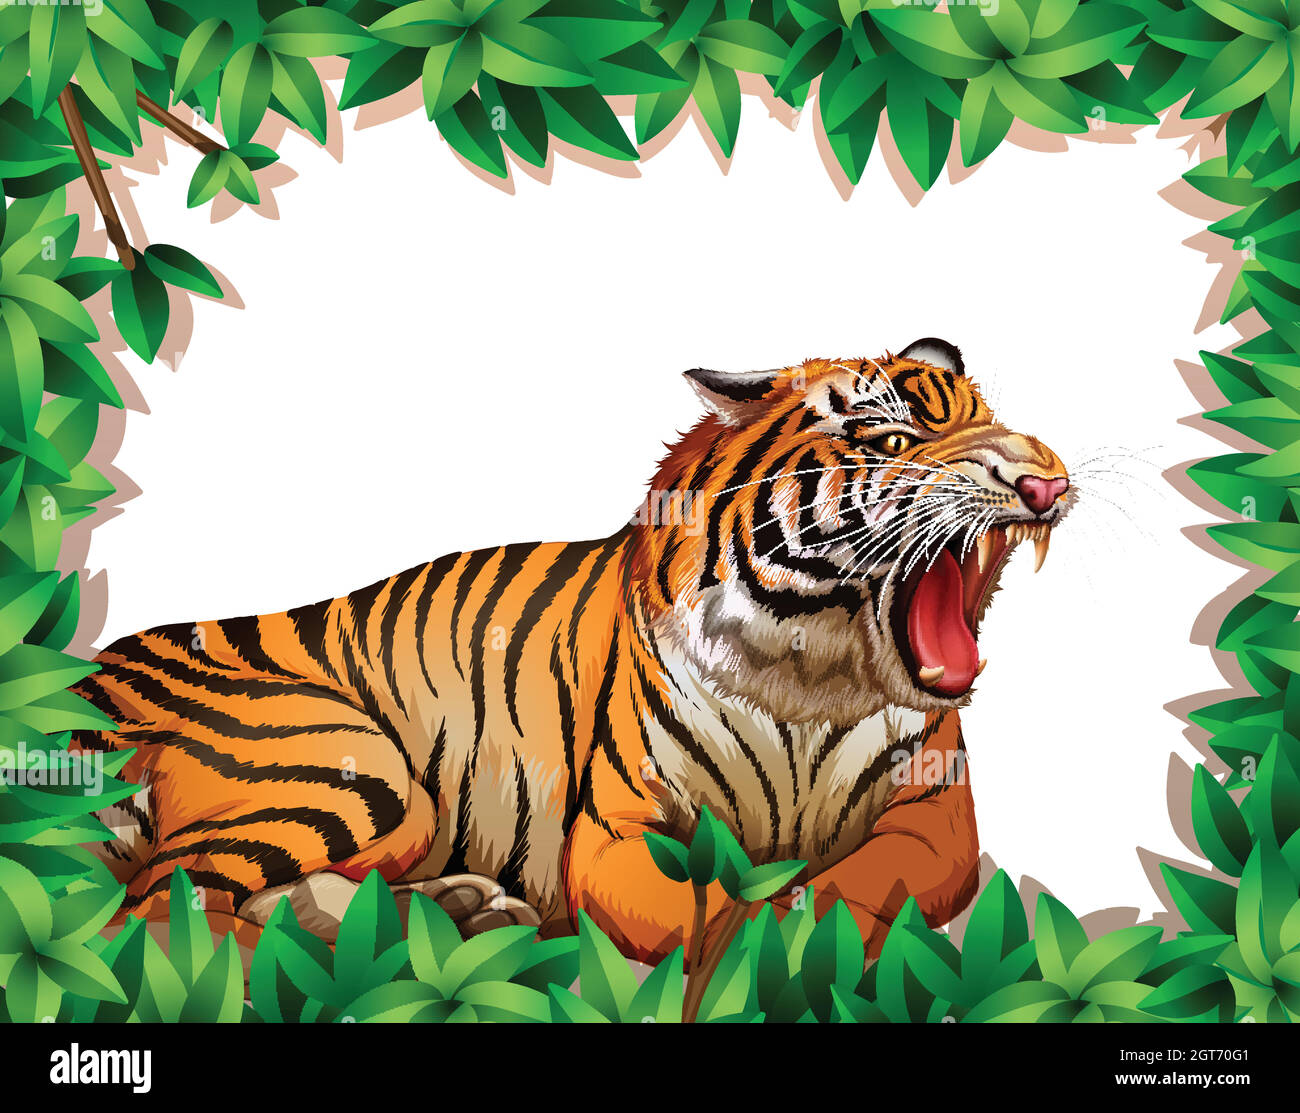 Cadre nature Tiger Image Vectorielle Stock - Alamy